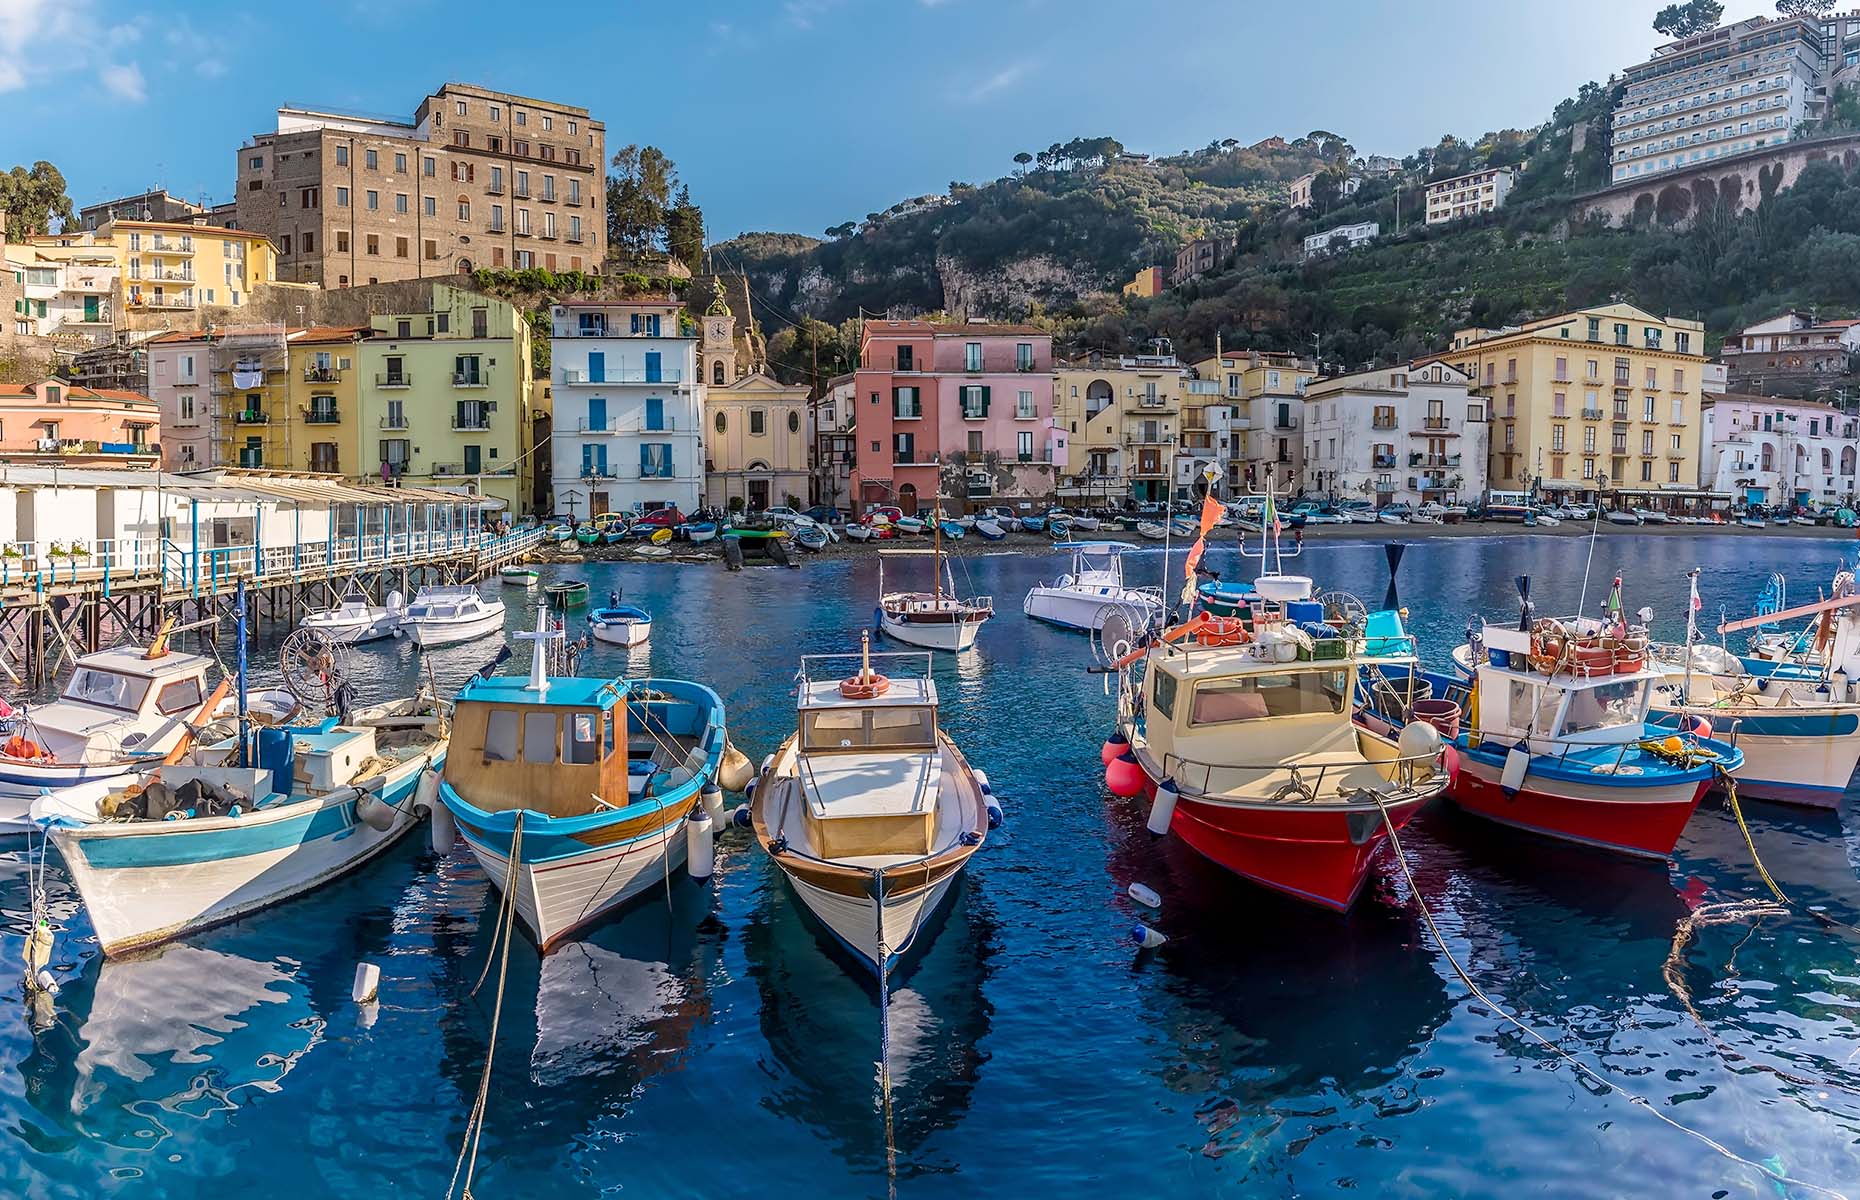 Sorrento harbour (Image: Nicola Pulham/Shutterstock)